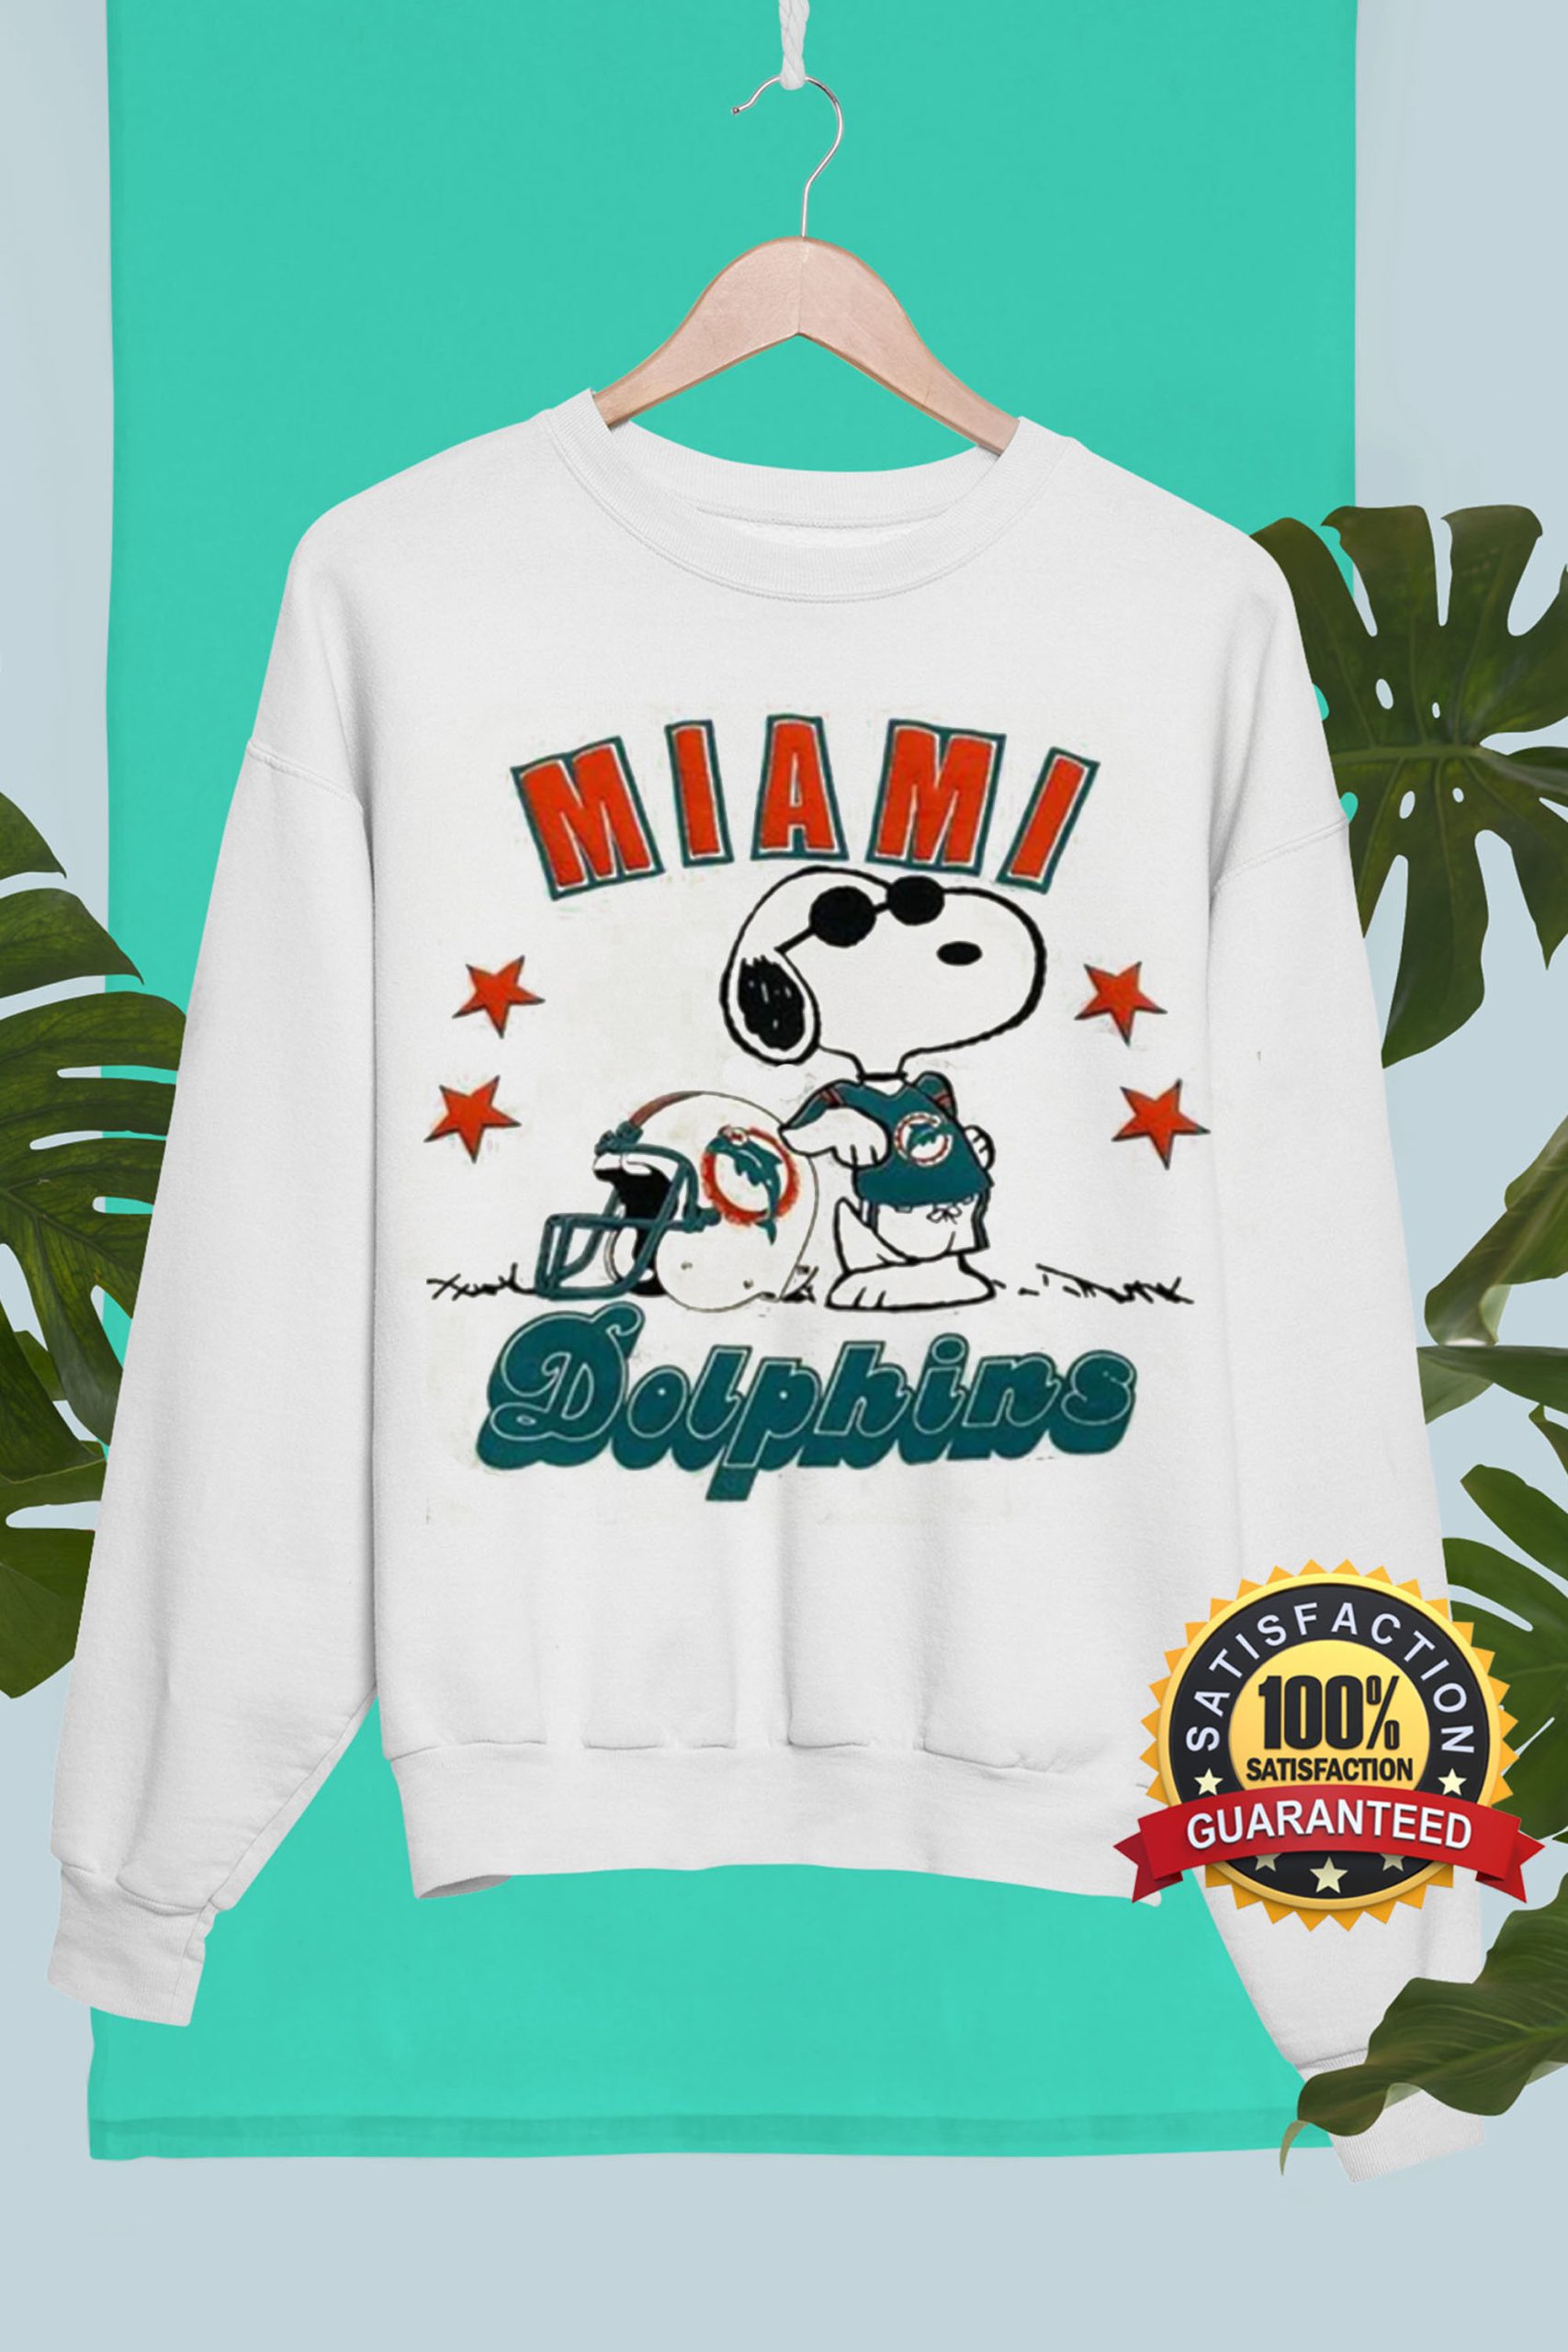 Vintage Shirt American Dolphins Shirt, Miami Football NFL Shirt, Peanuts Snoopy Sport